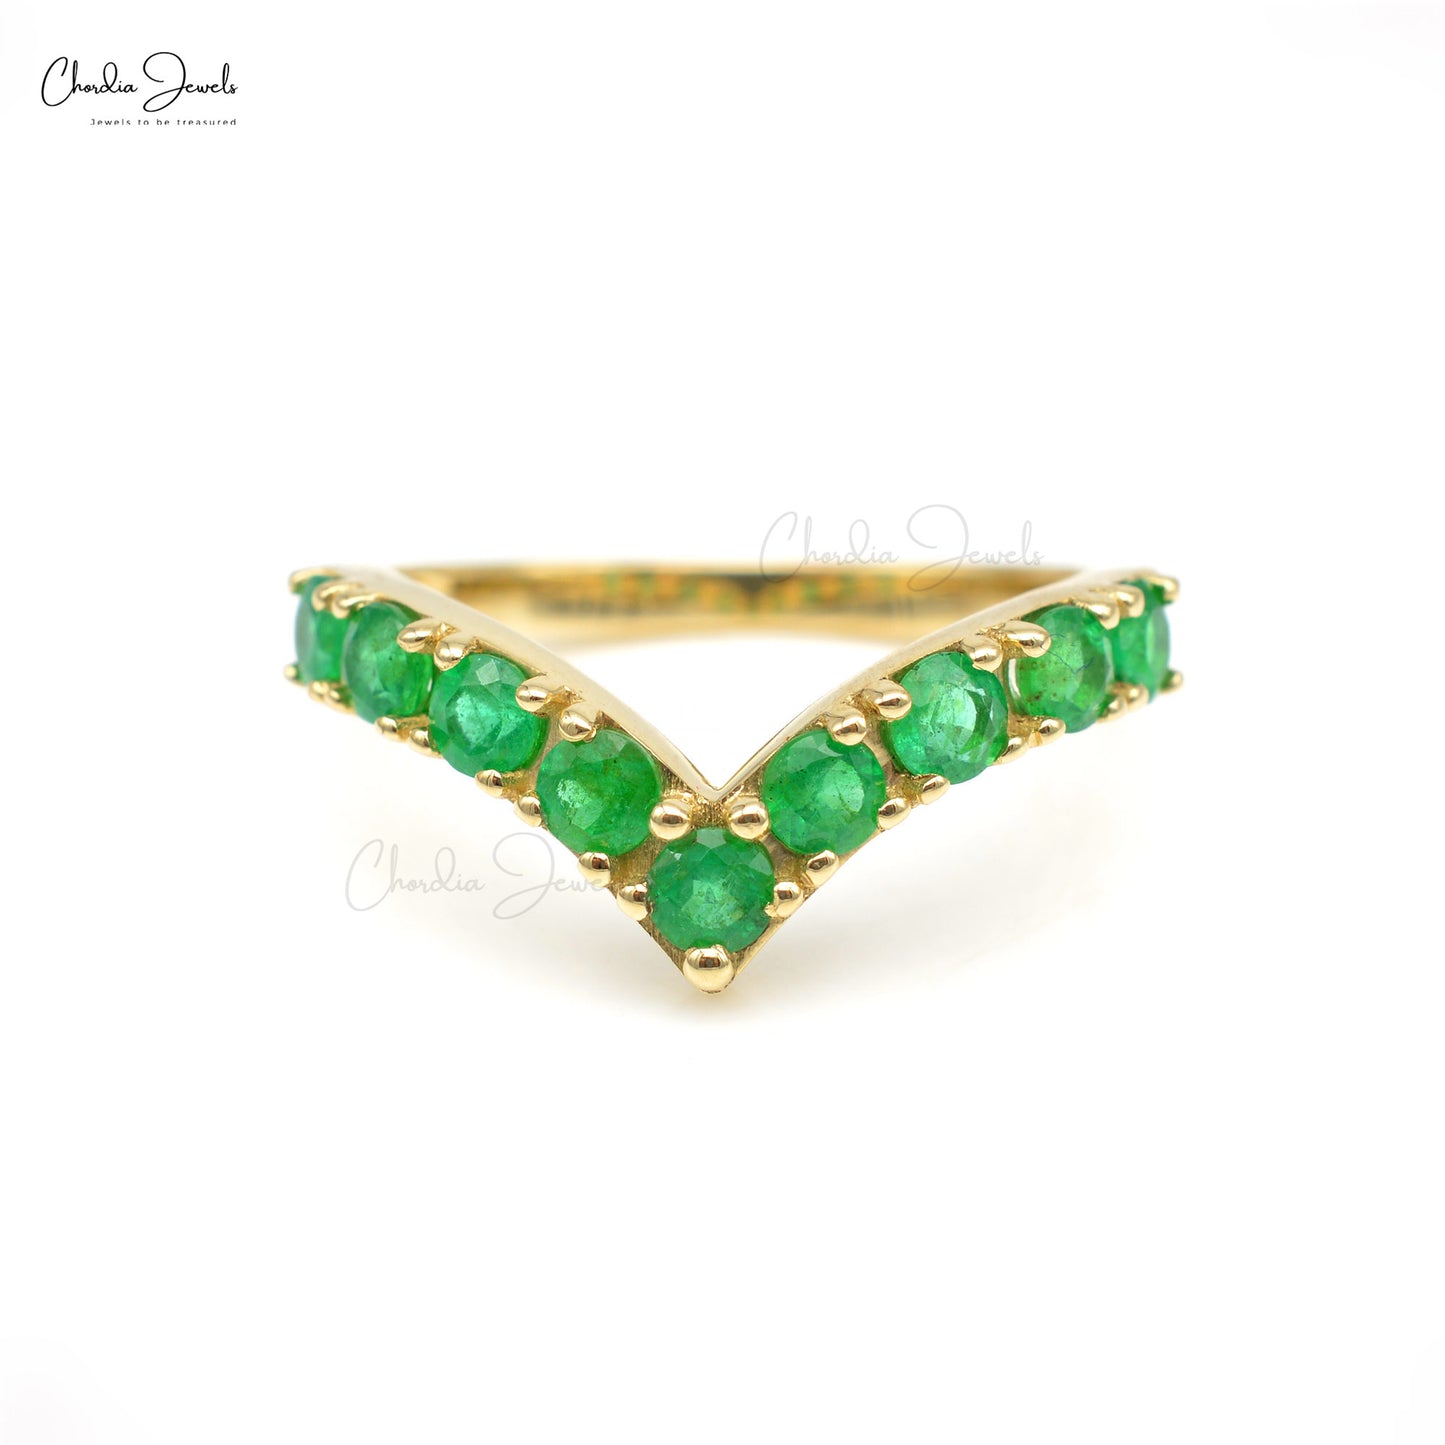 emerald dainty ring